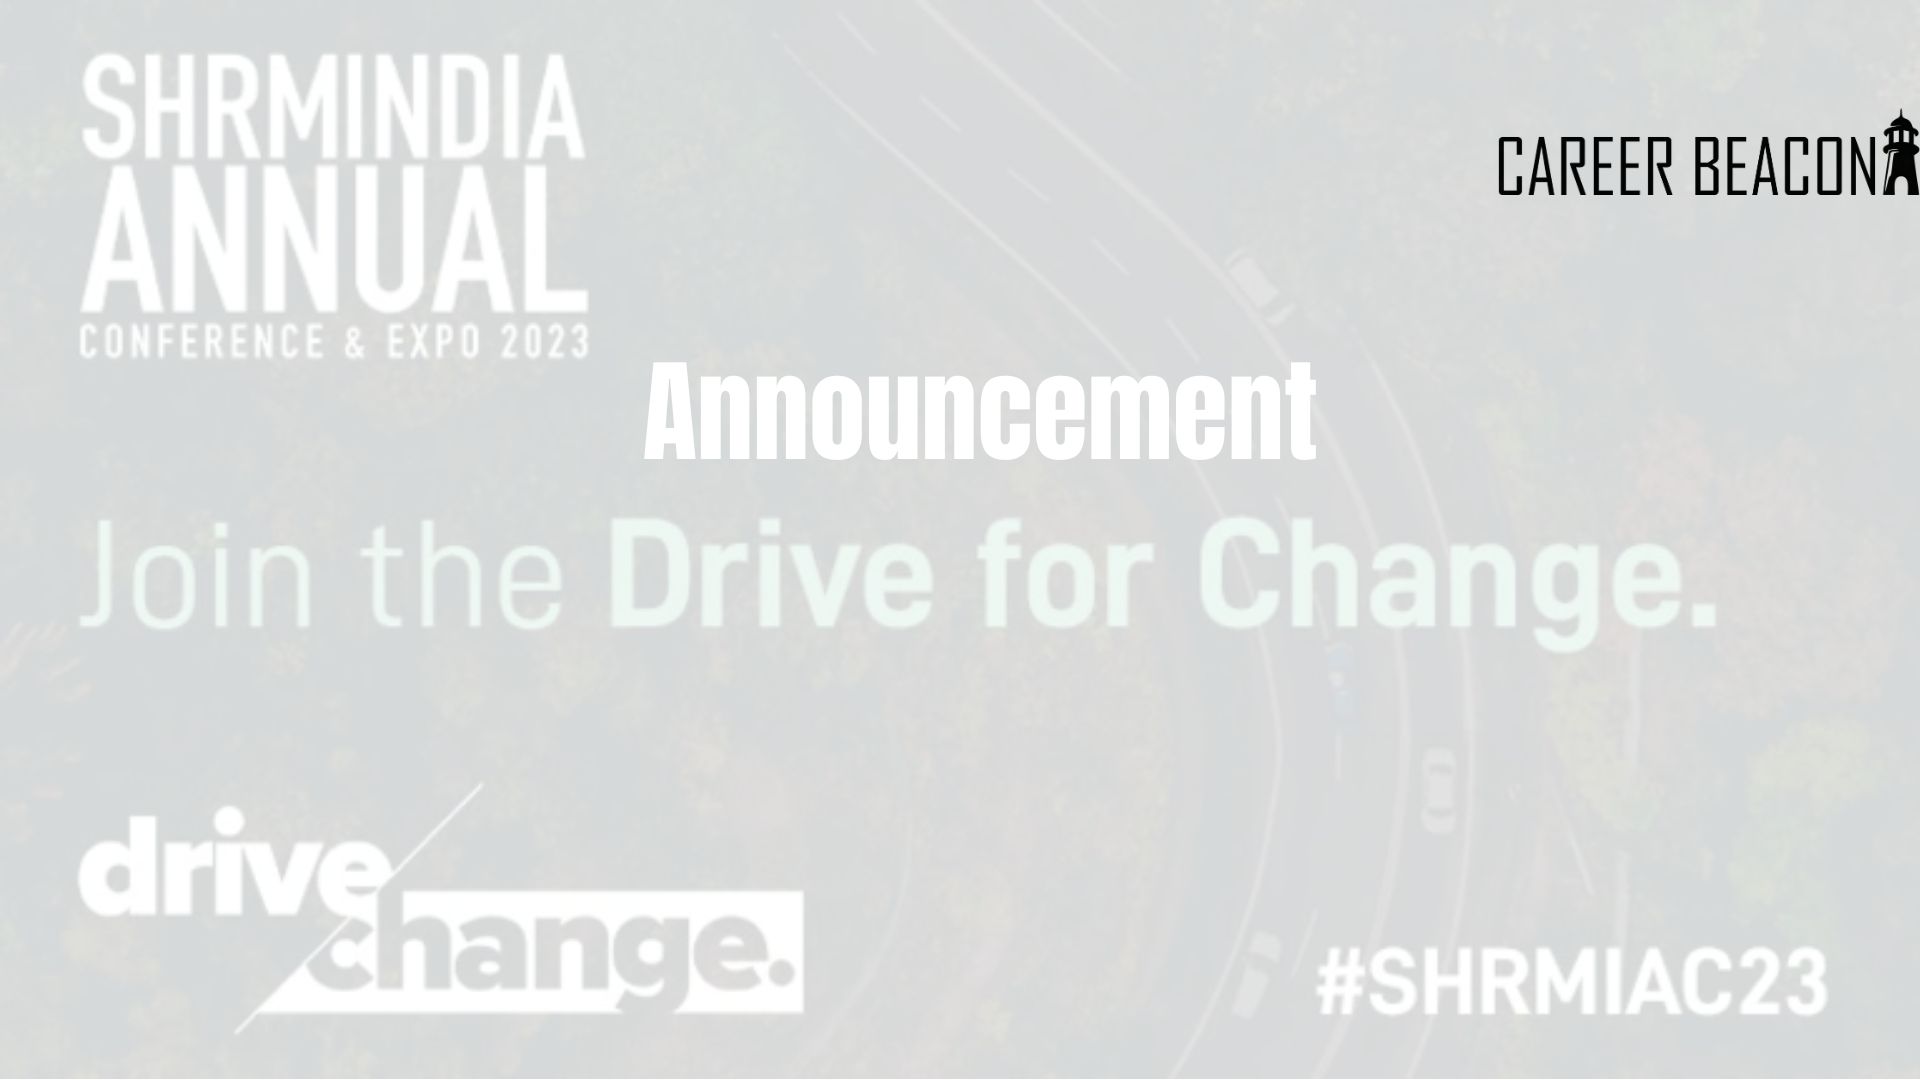 SHRM India announces SHRMI Annual Conference and Expo 2023